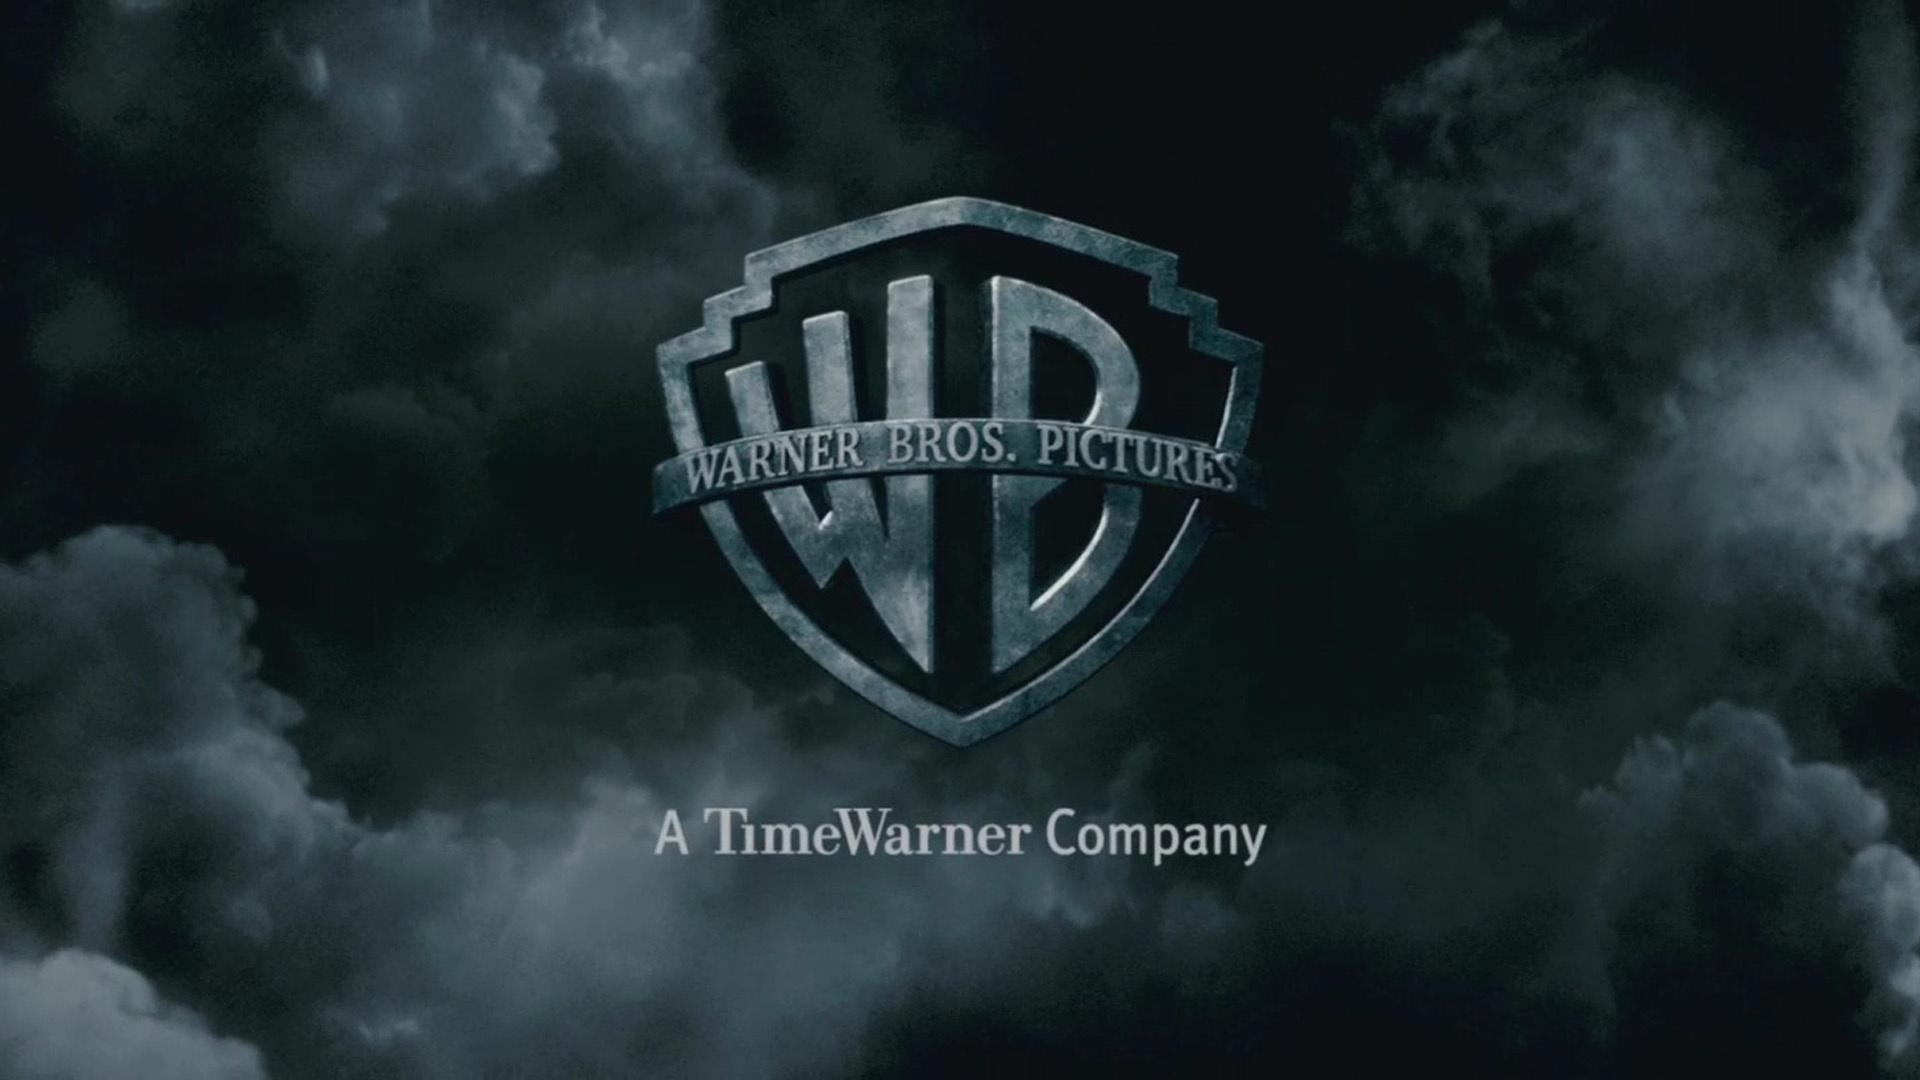 Warner Bros Entertainment Best Wallpaper Hd, Warner Bros Entertainment, Other